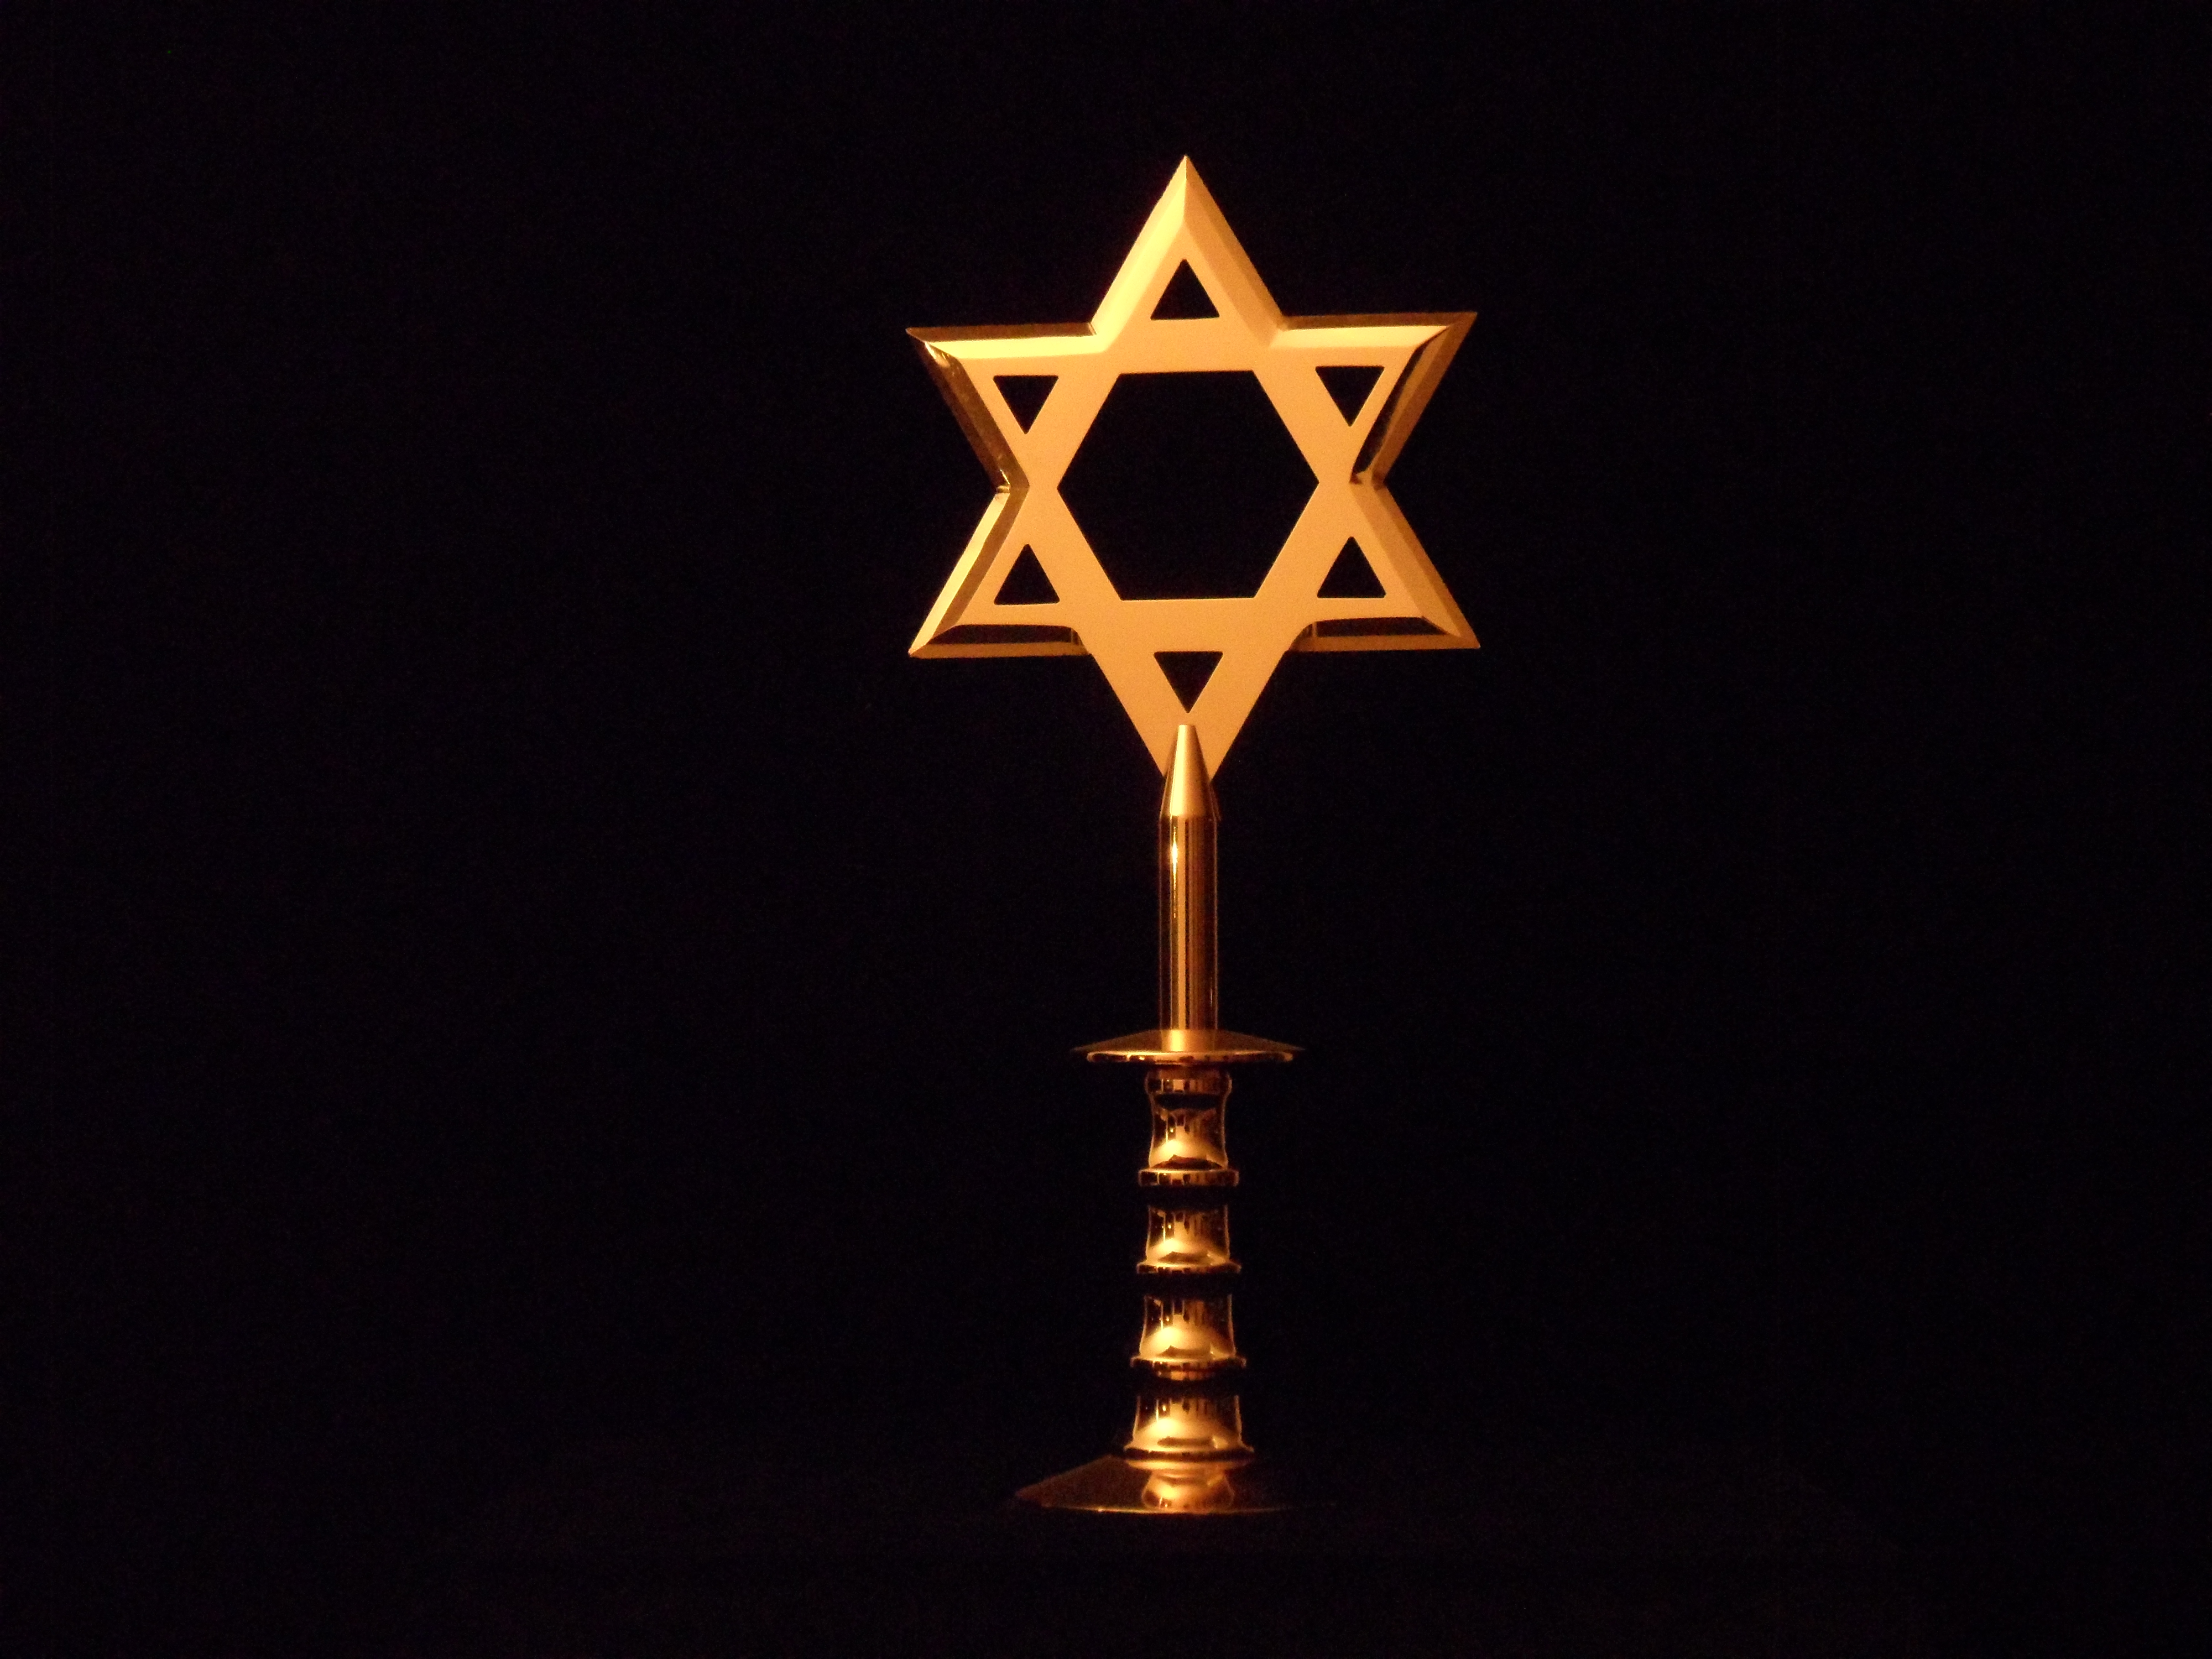 The Adoration De Aanbidding Jewish symbol as fistweapon Joods symbool als vuistwapen Gold plated steel